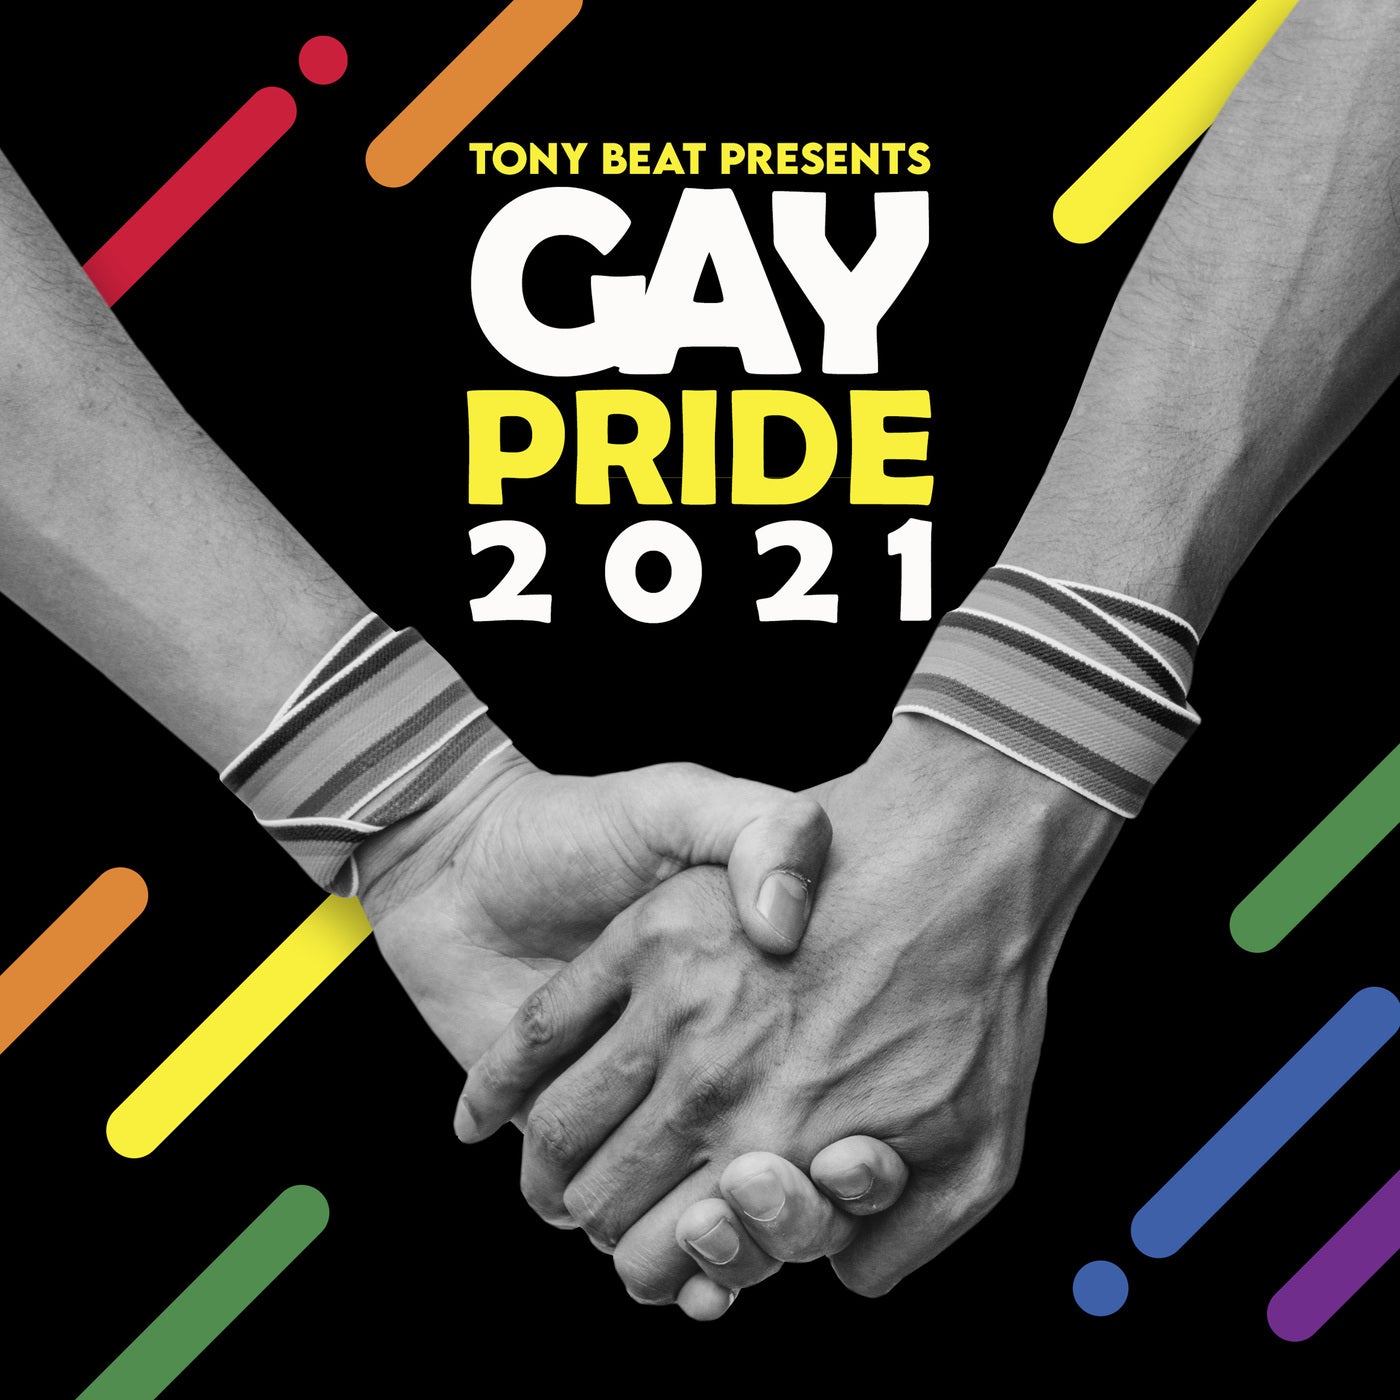 TONY BEAT PRESENTS GAY PRIDE 2021